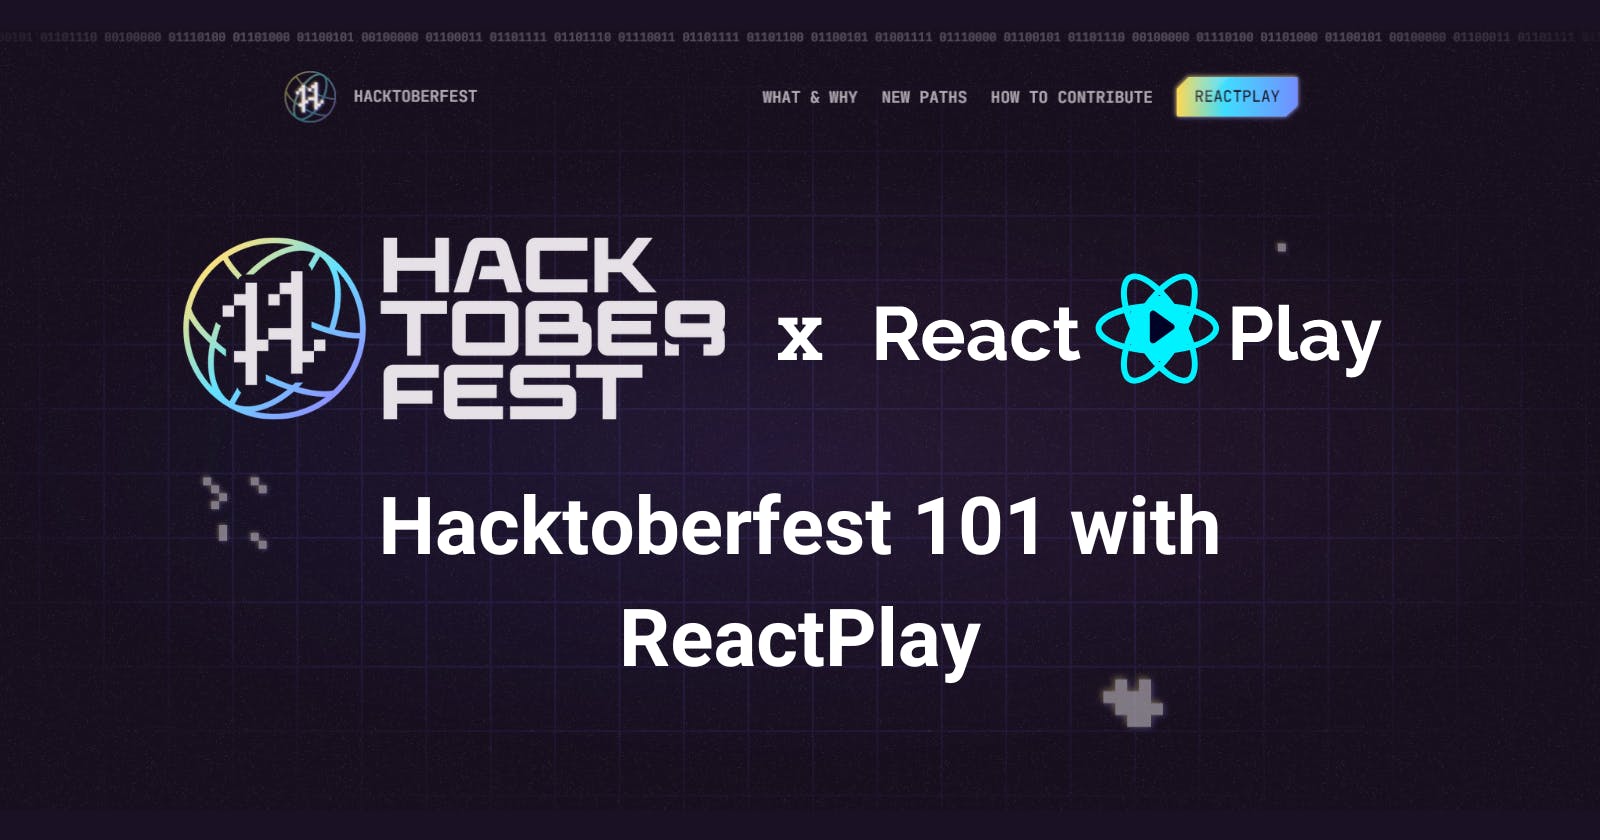 Hacktoberfest 101 with ReactPlay